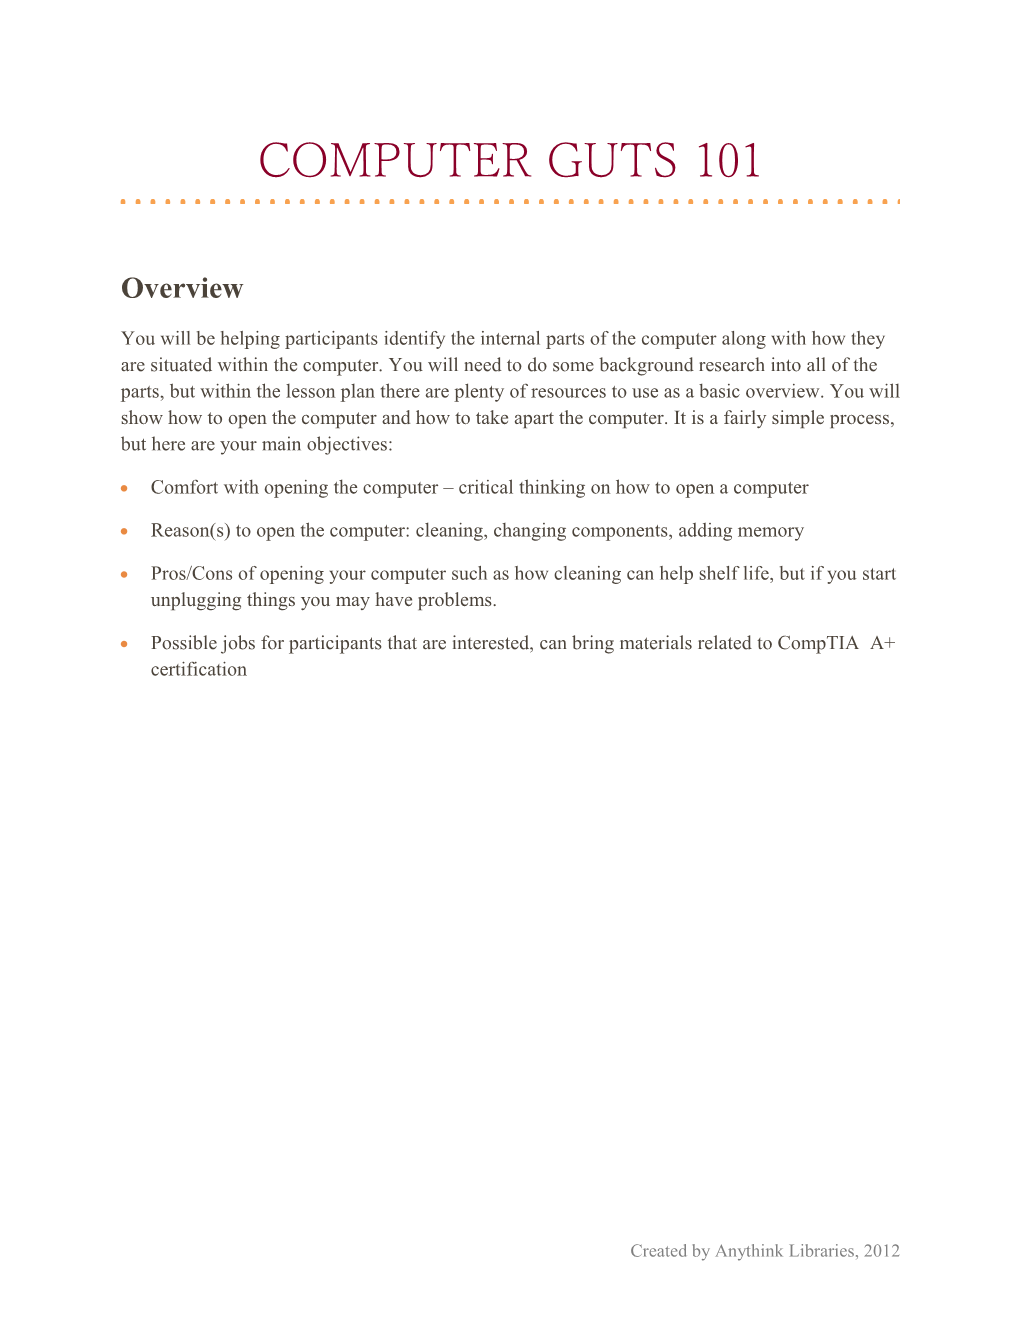 Computer Guts 101